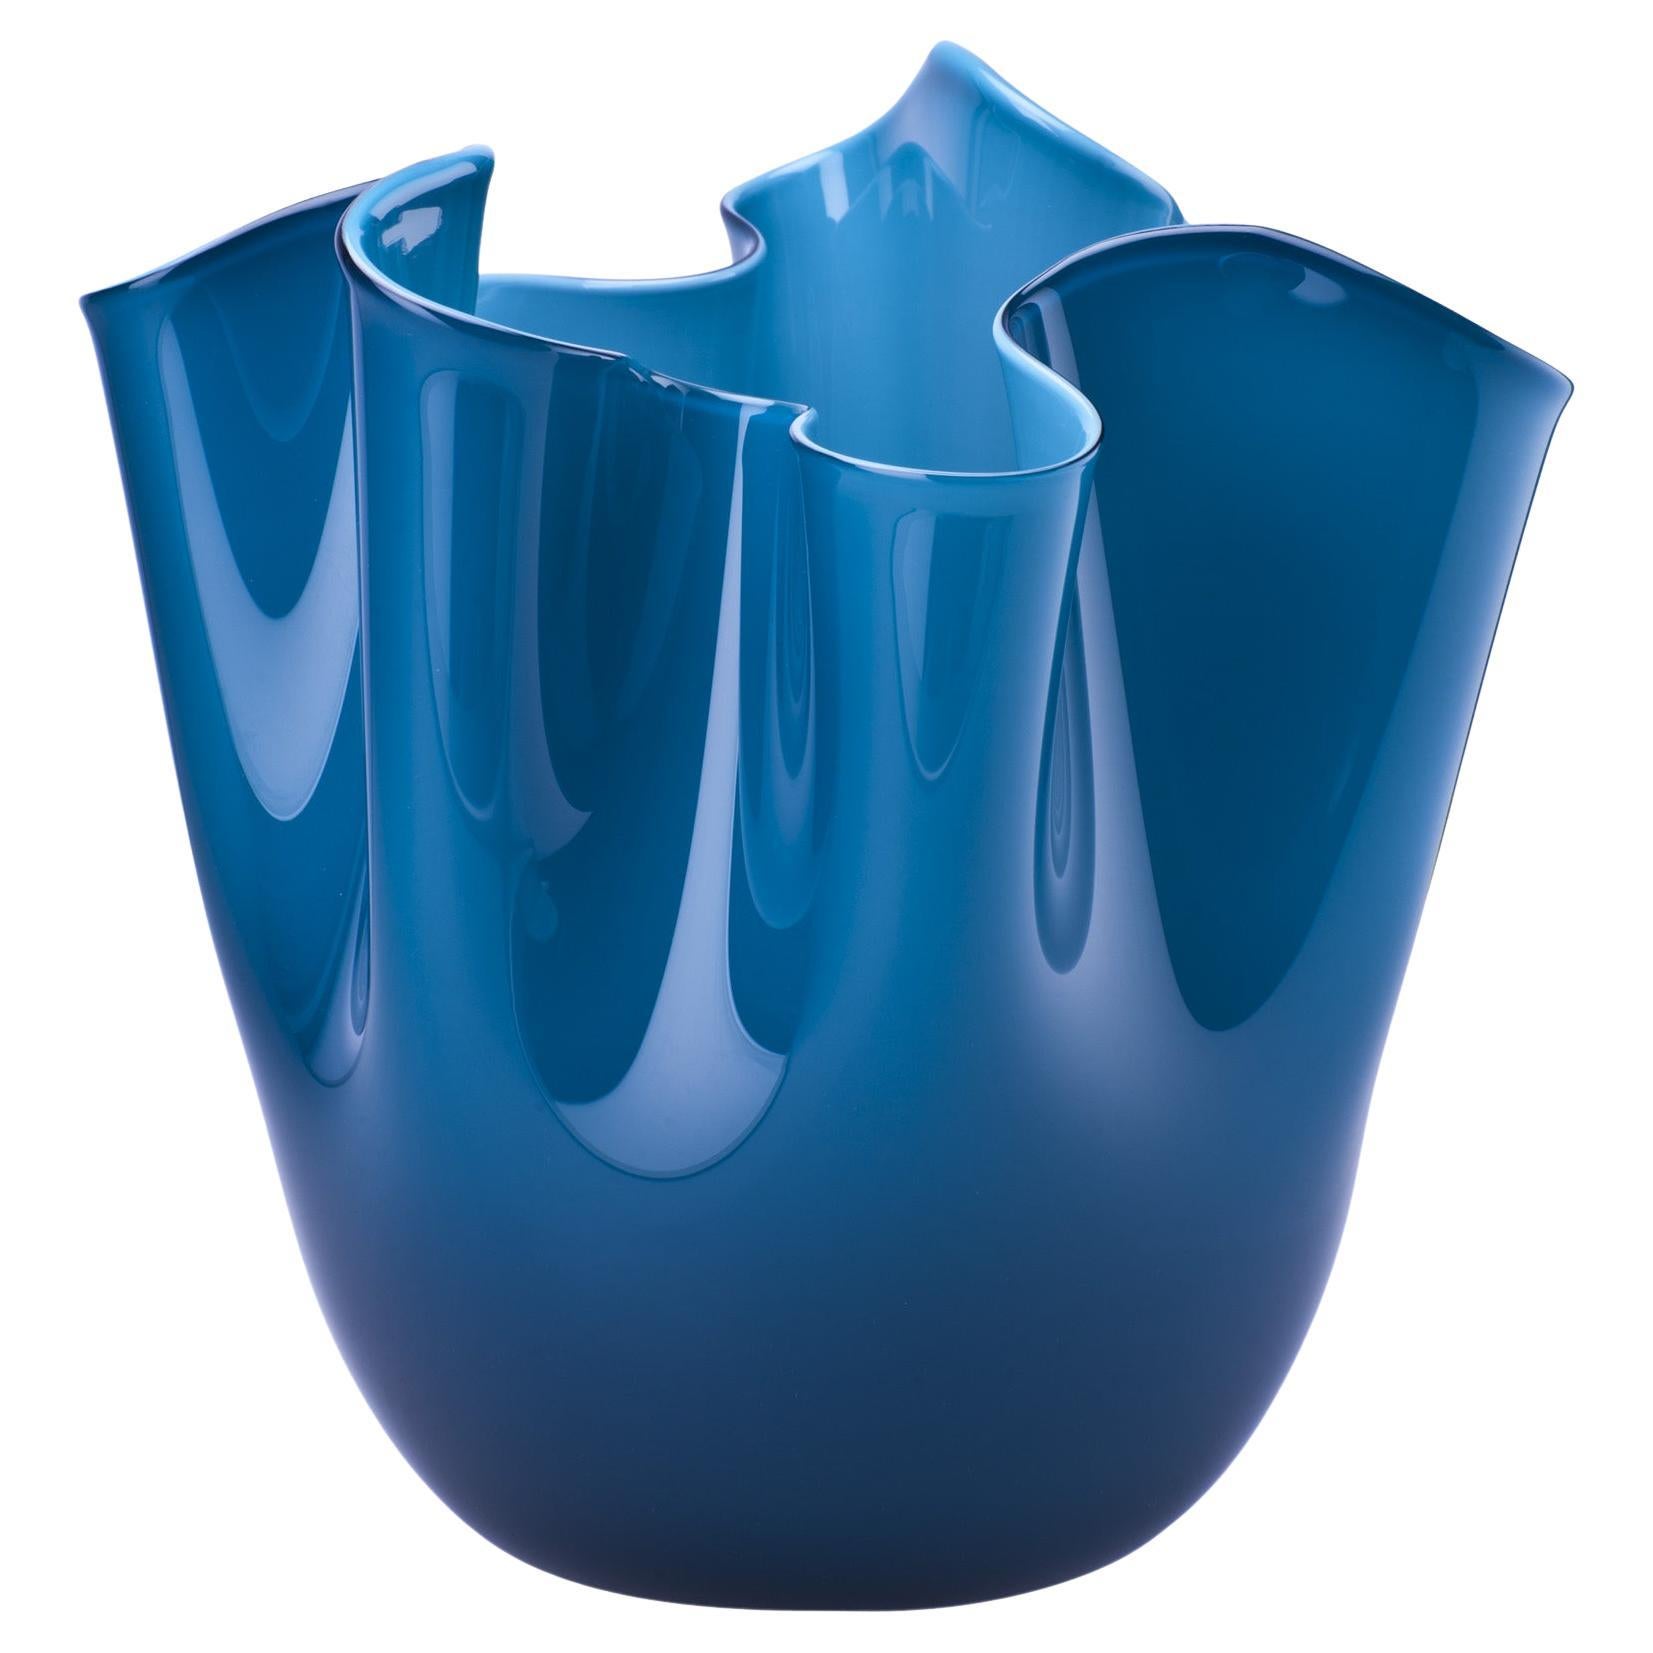 Venini Fazzoletto Opalino, mittelgroße Vase aus Muranoglas in Horizon